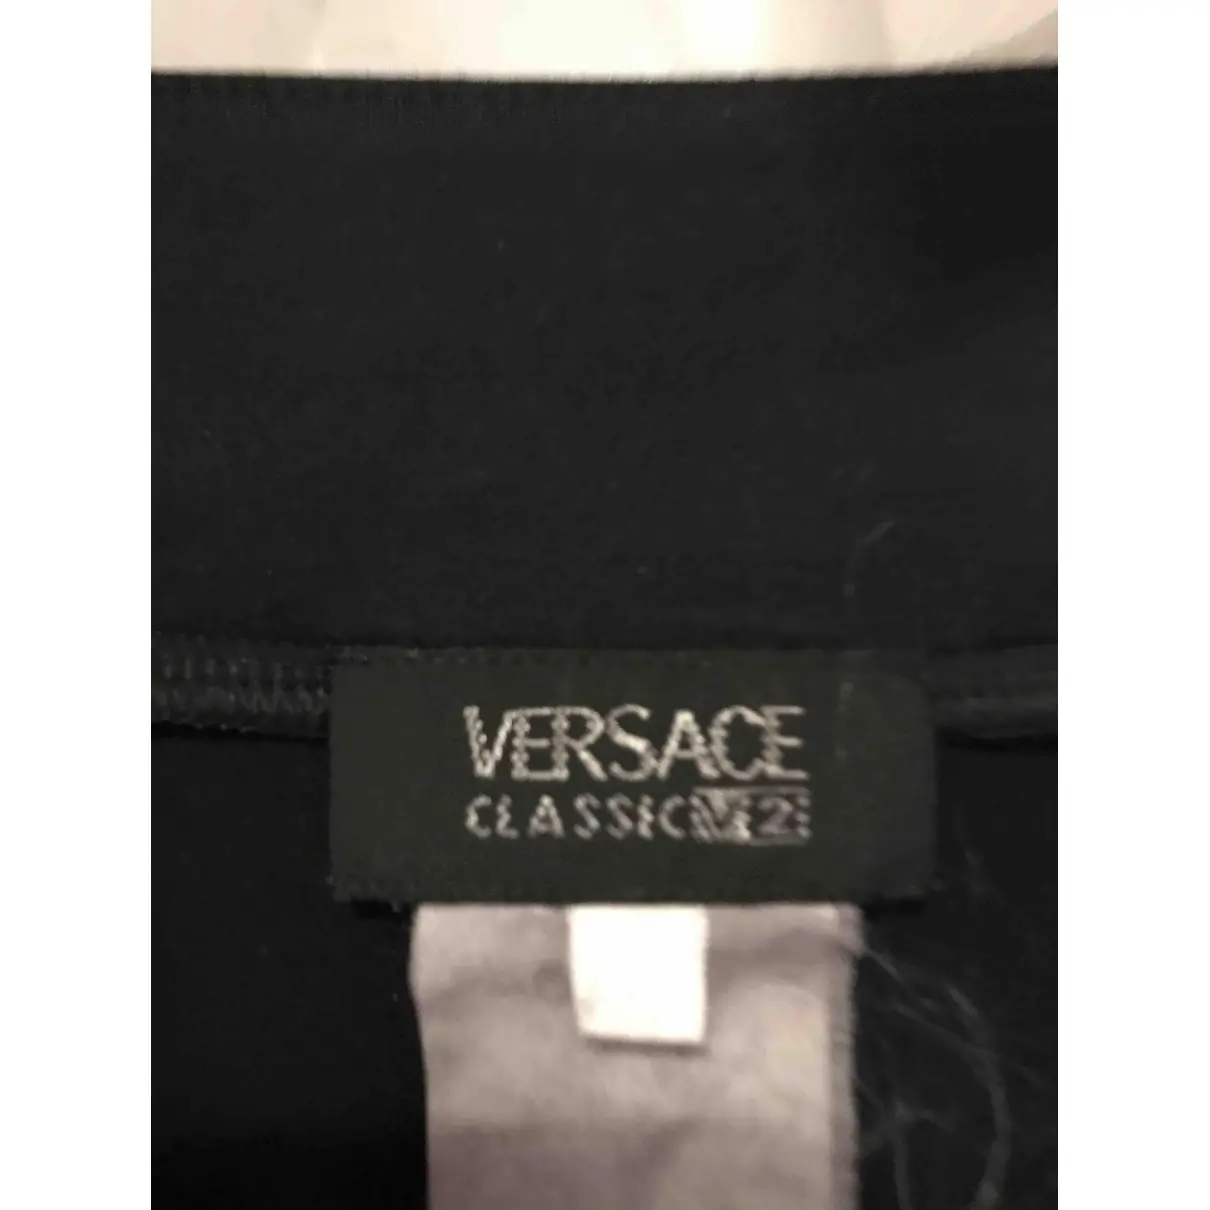 Versace Top for sale